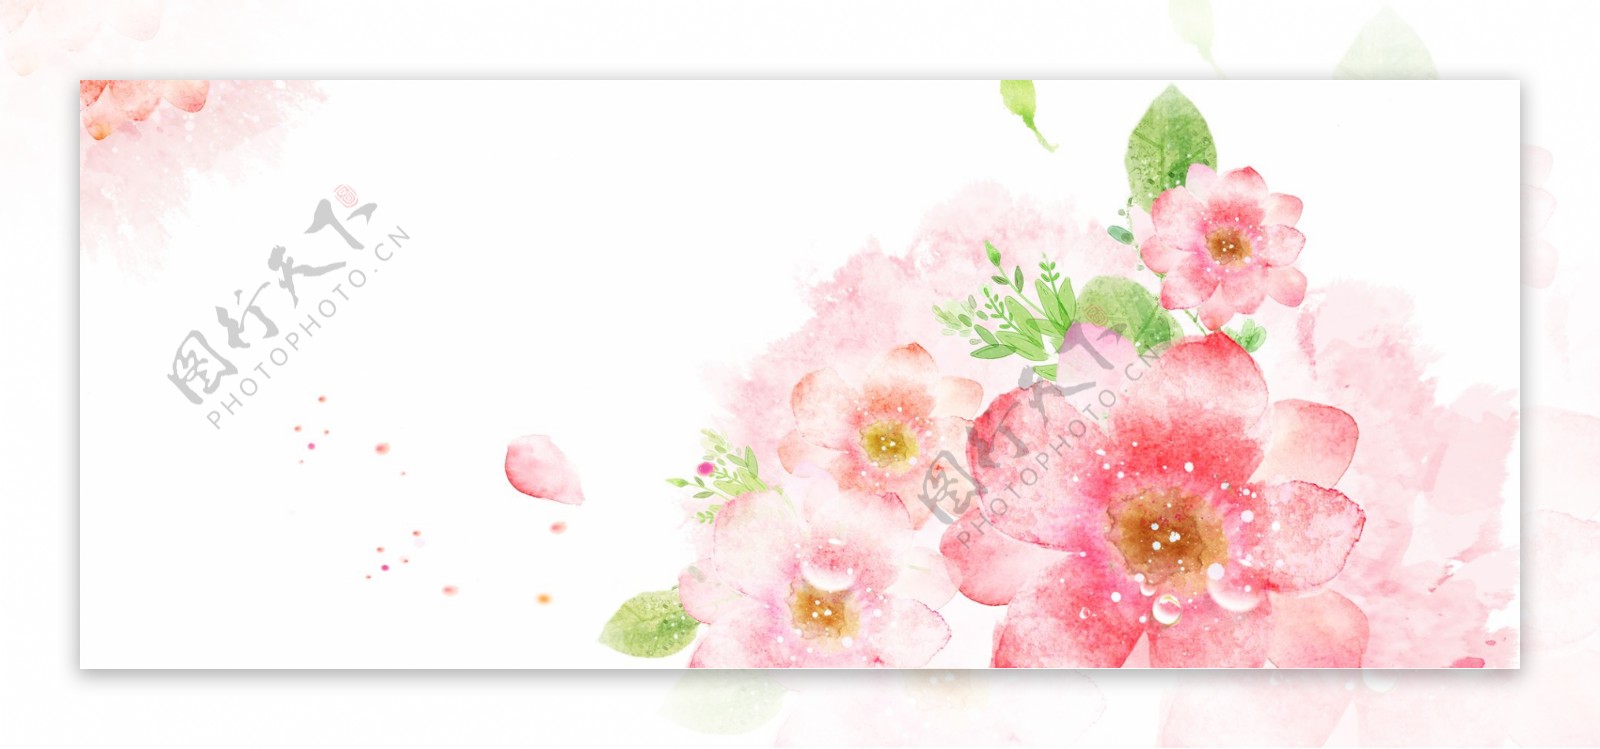 清新粉色花朵banner背景素材